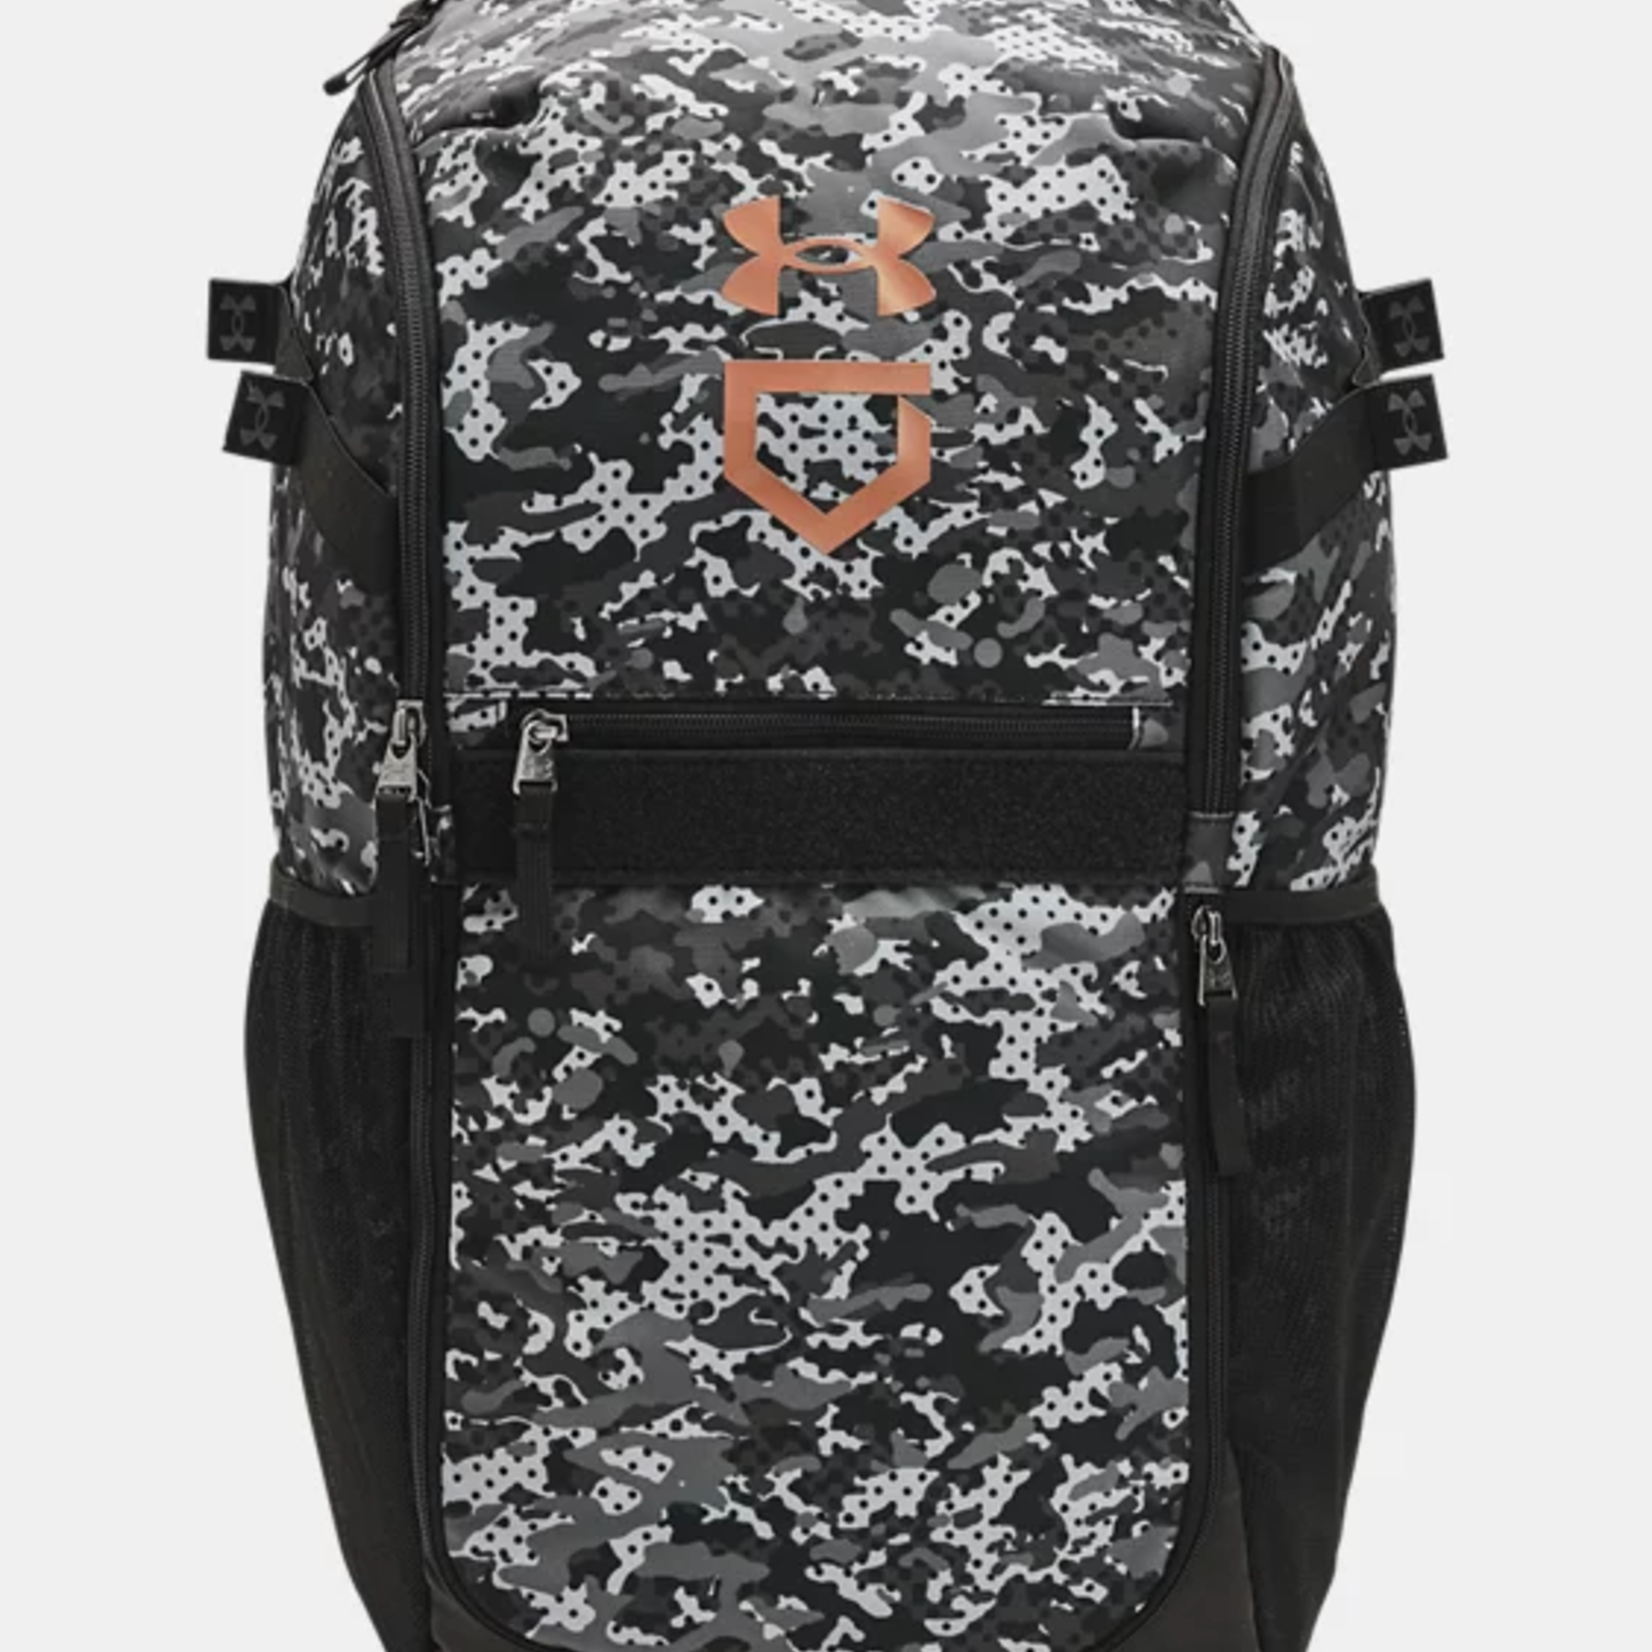 Under Armour Under Armour Baseball Backpack Bag, Utility Print